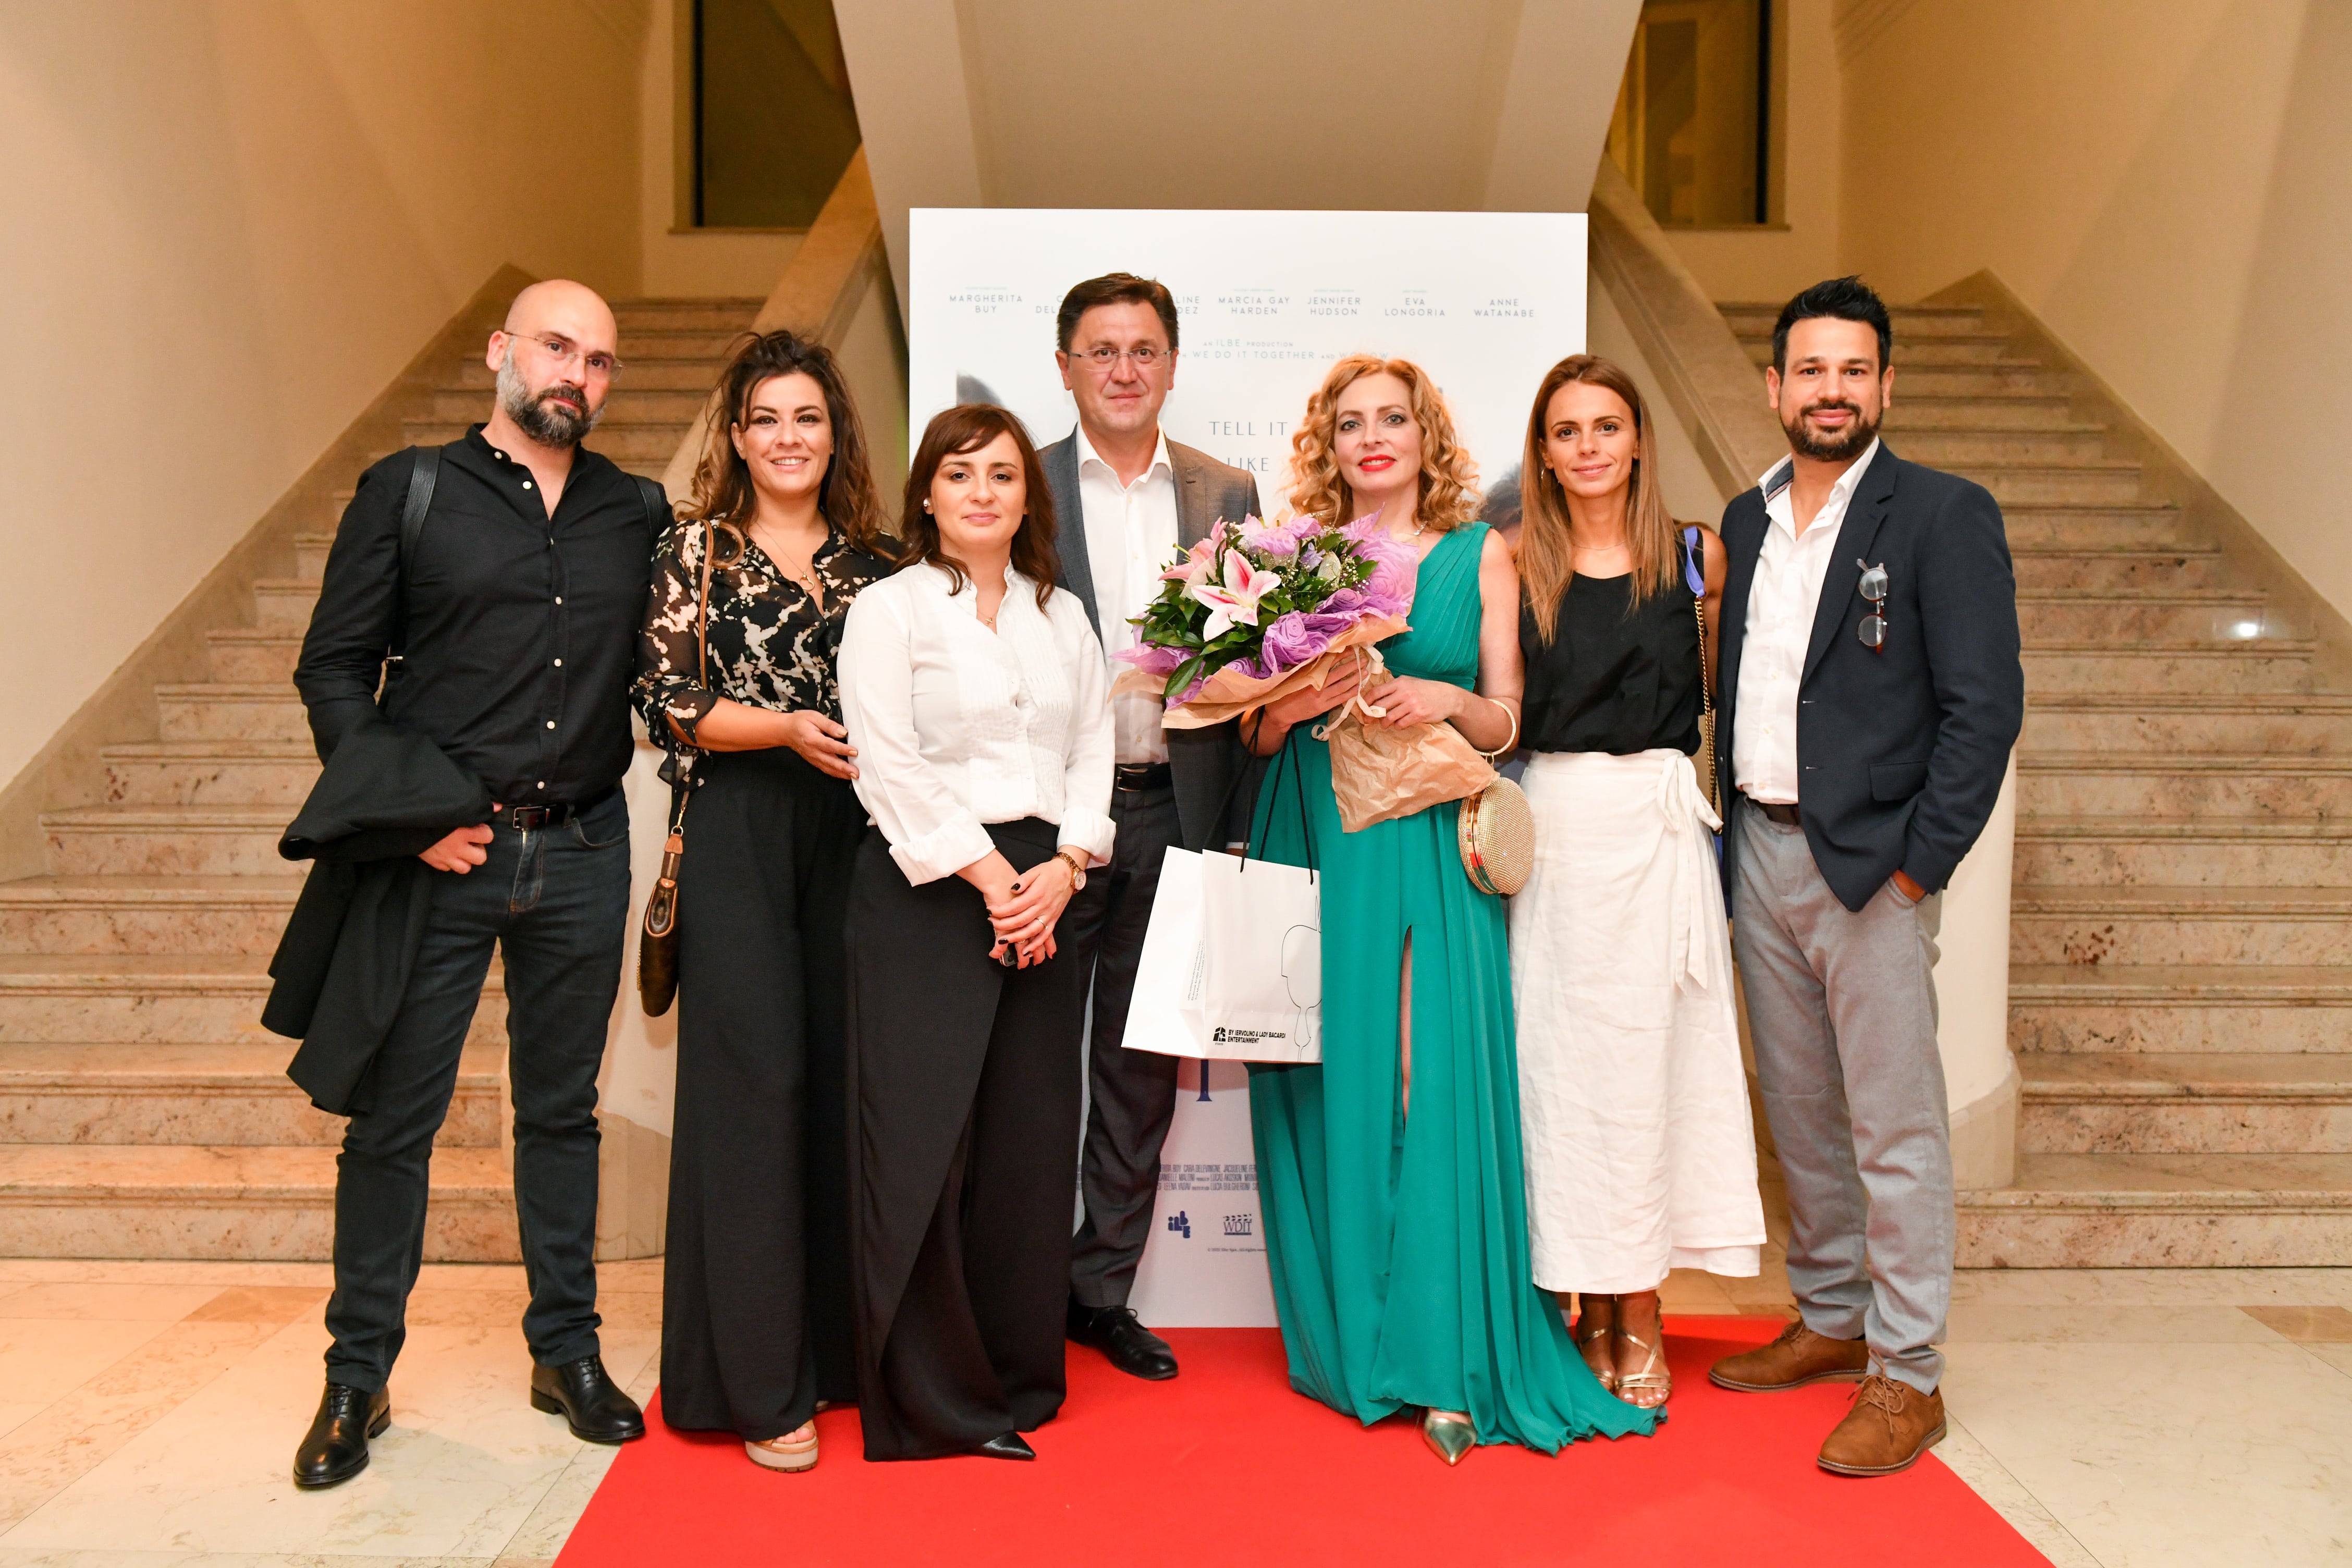 from the left: Bojan Kosovic and Tatjana Nikolic, Archangel Digital Studios and Bojana Zoric, Dragan Nikolic, Andjelka Jankovic, Peter Nalli with Chiara Tilesi 